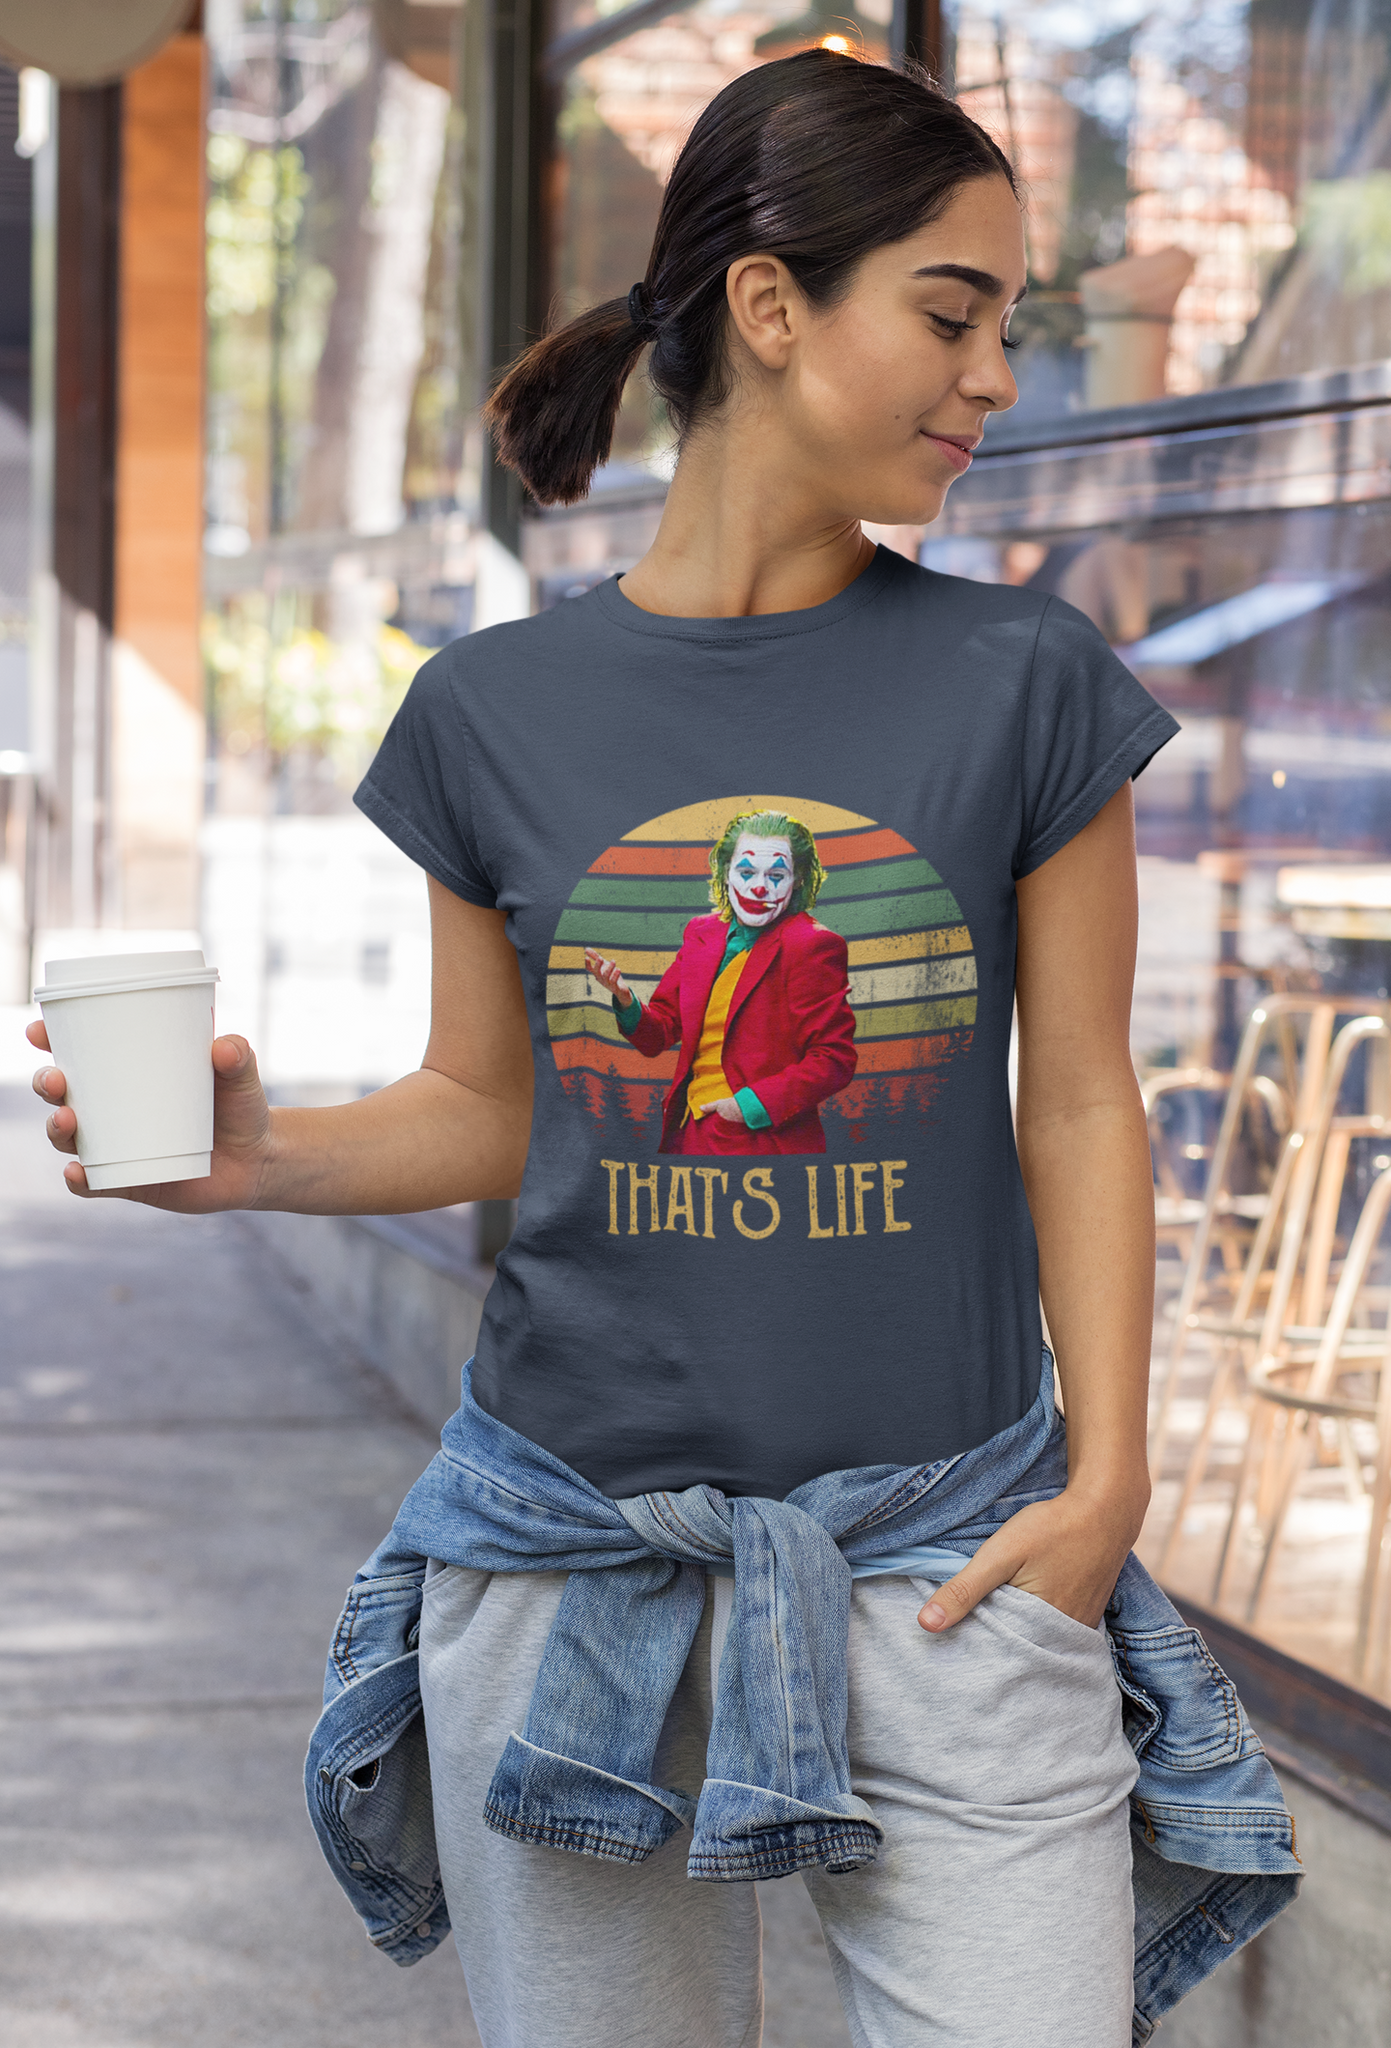 Joker Vintage T Shirt, Joker The Comedian Tshirt, Thats Life Shirt, Halloween Gifts